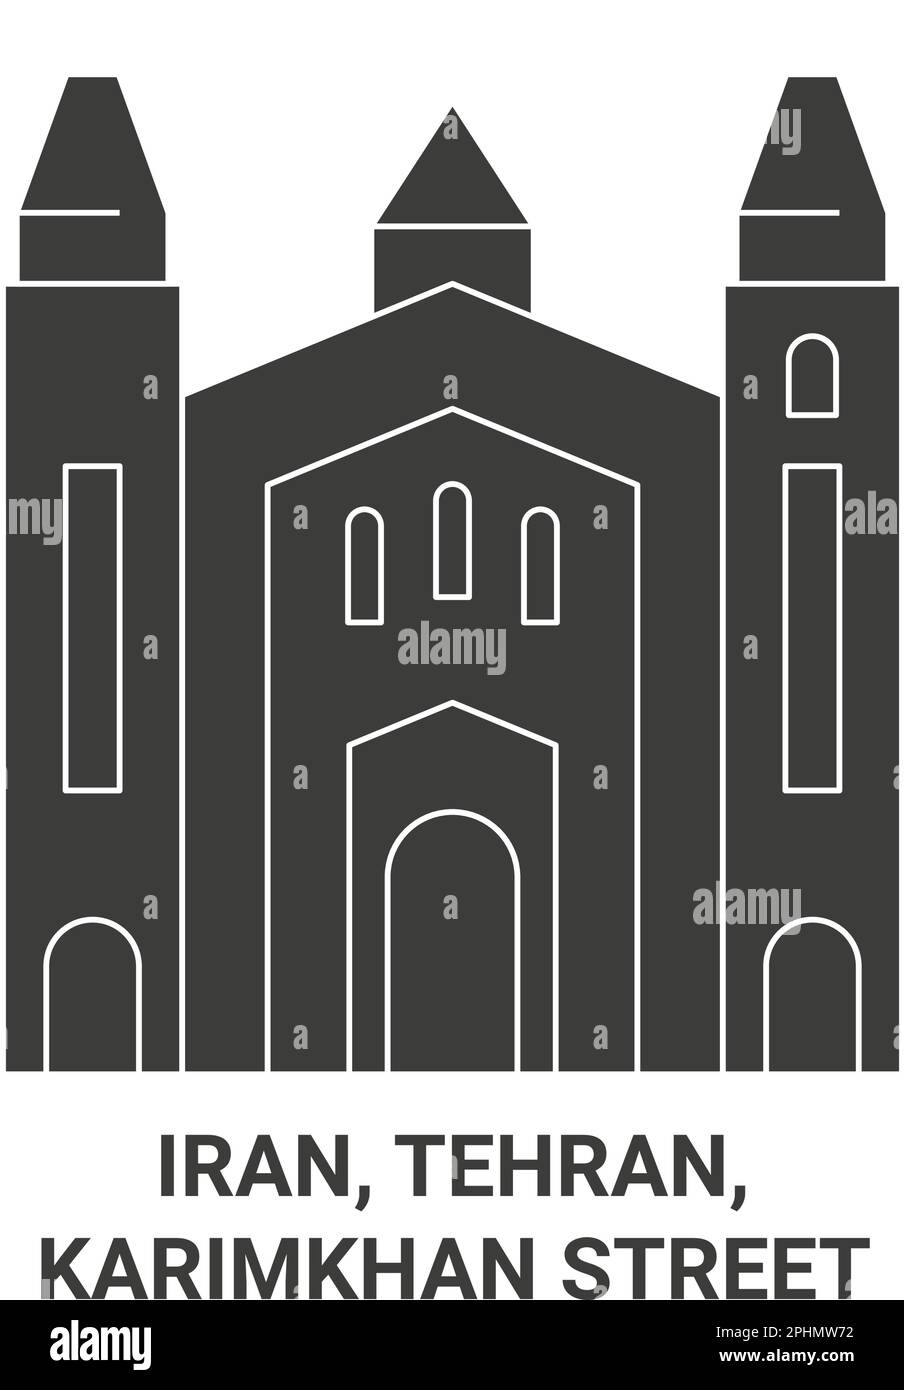 Iran, Teheran, Karimkhan Street Reise-Wahrzeichen-Vektor-Illustration Stock Vektor